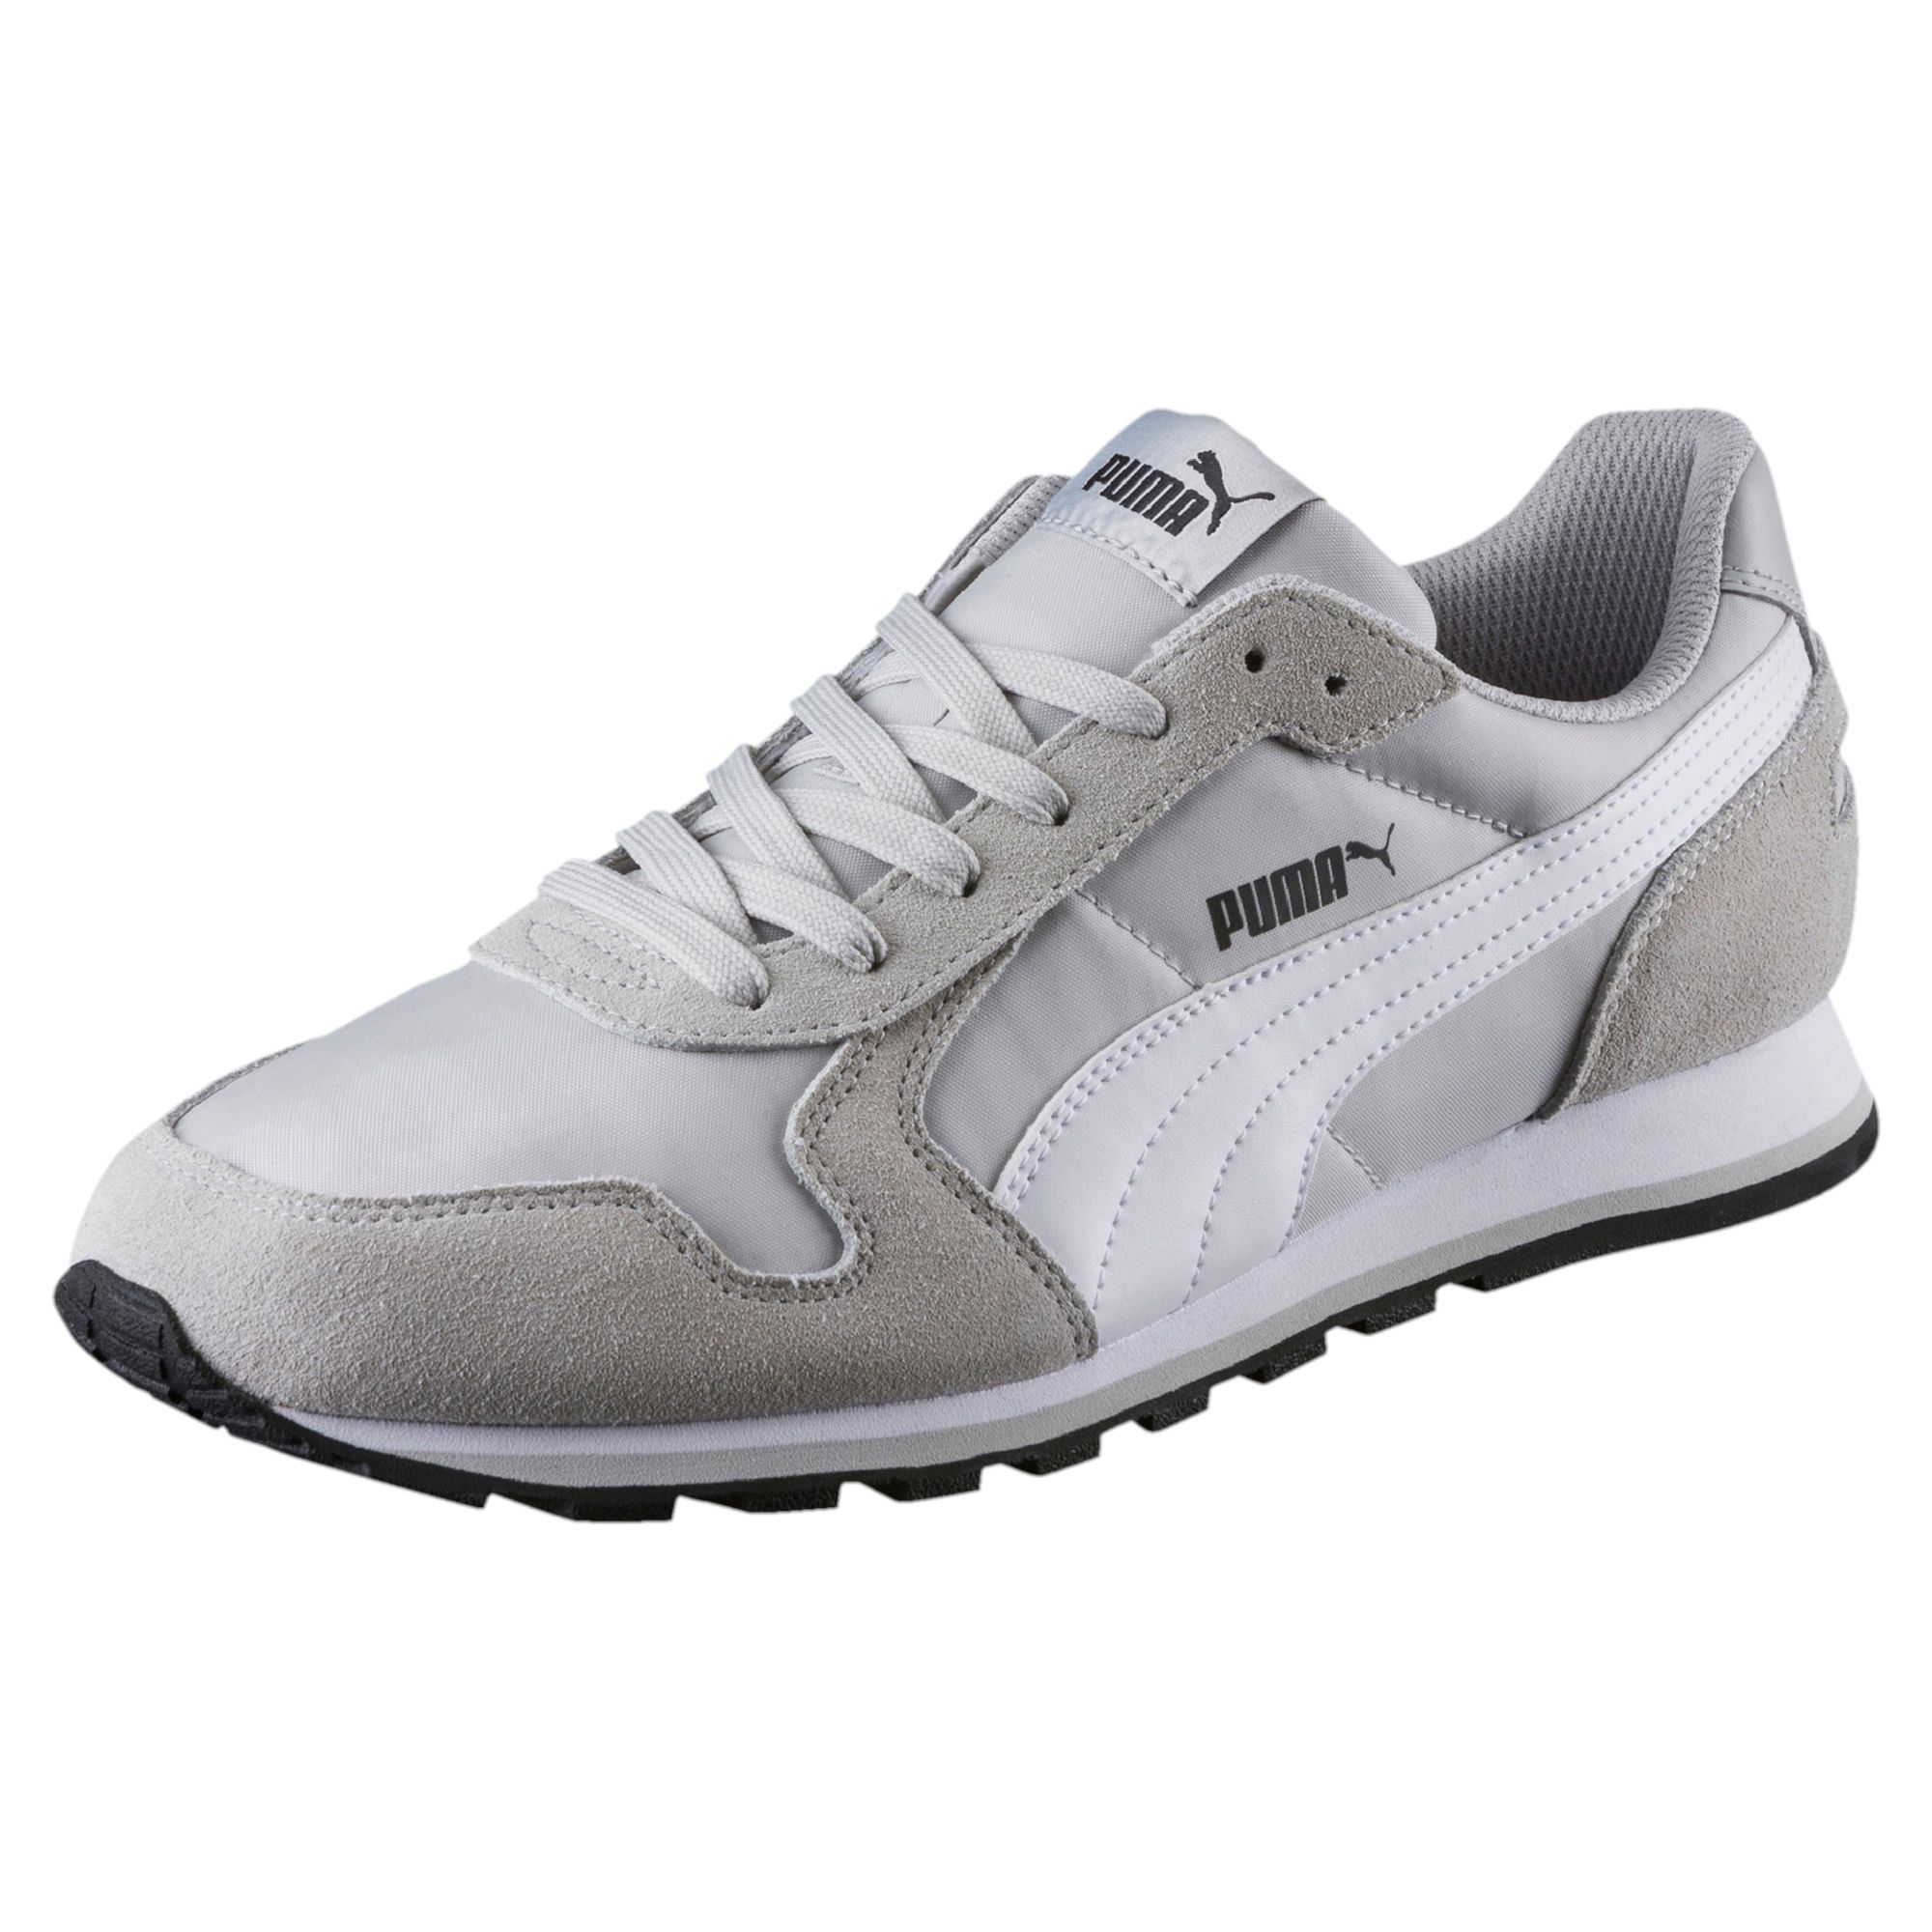 PUMA ST Runner NL Footwear Sneakers Sport Classics Unisex New | eBay